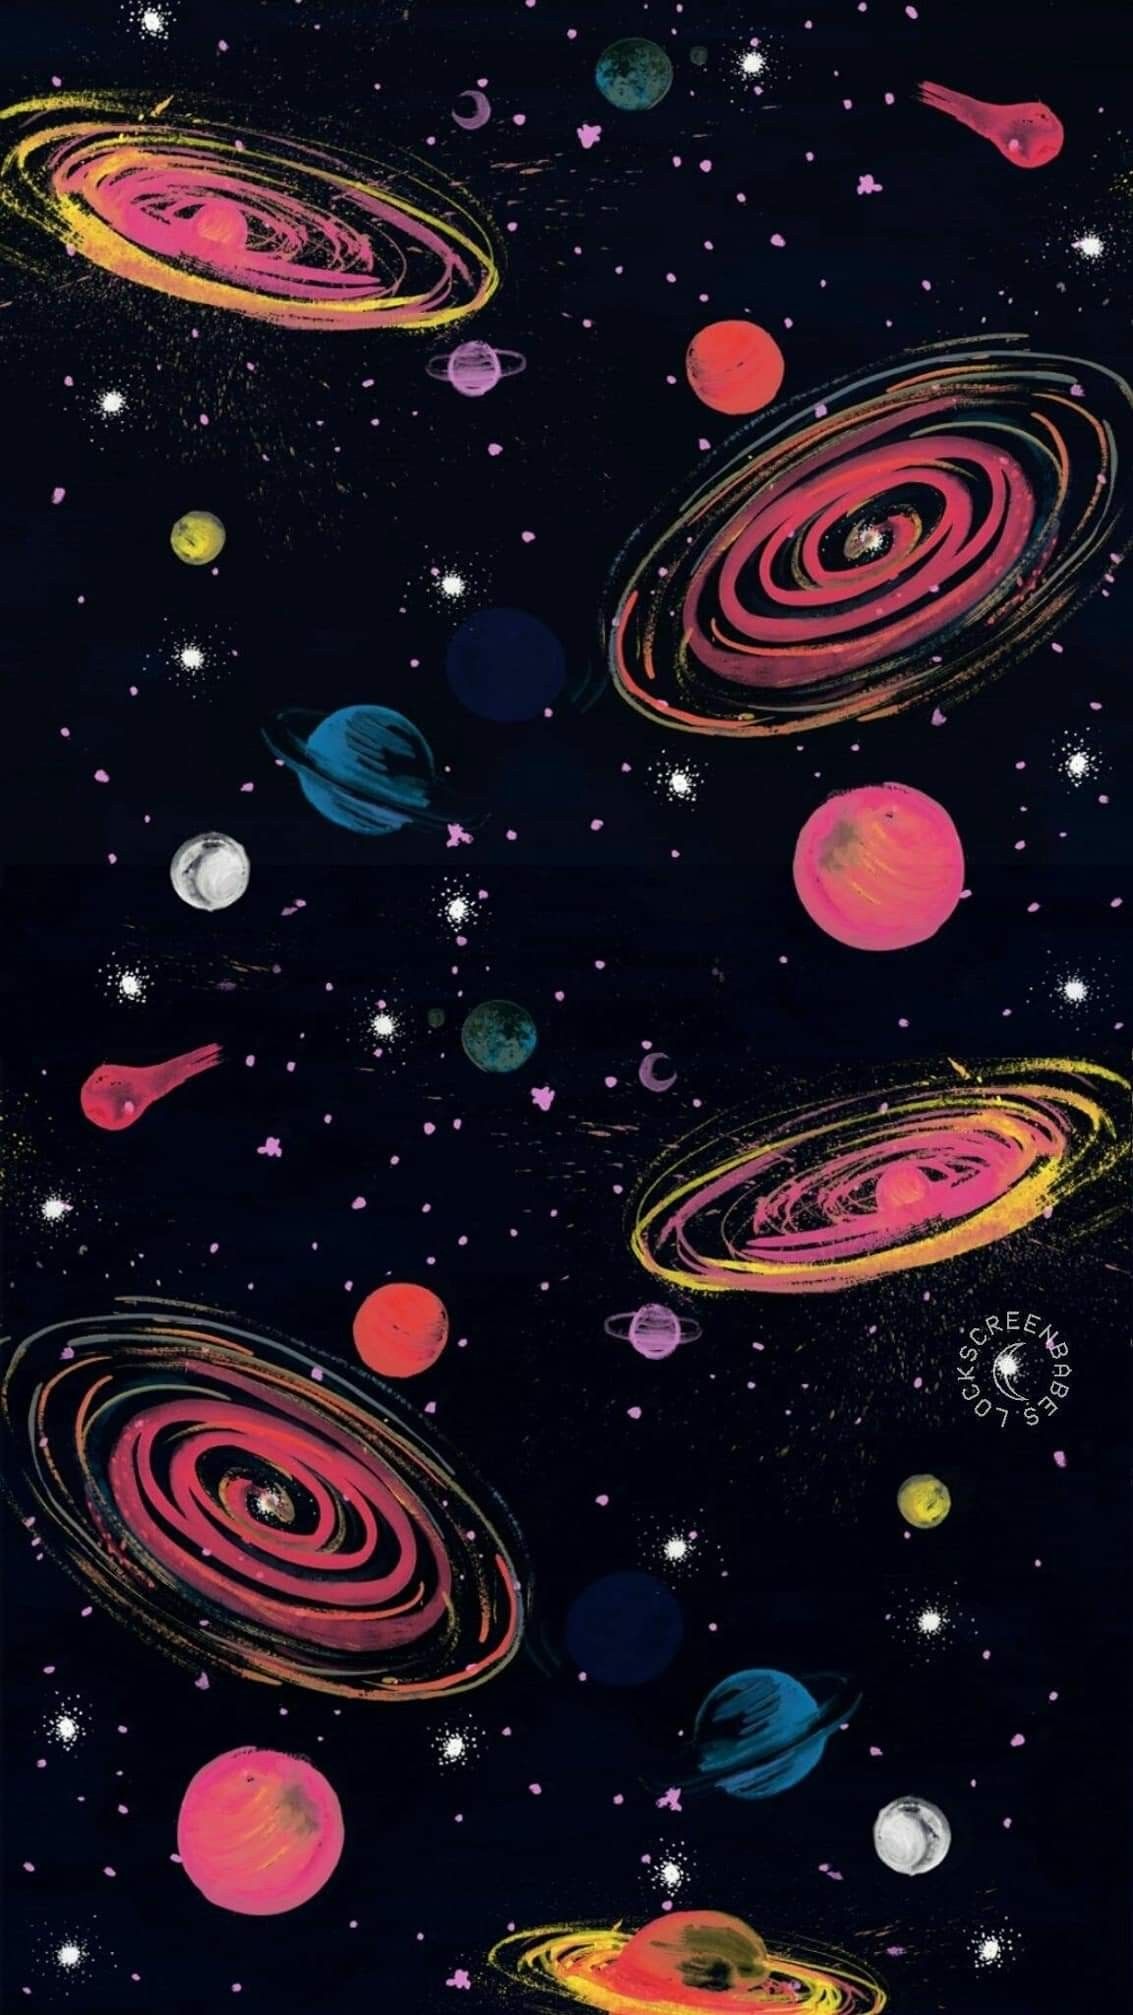  lucida  Wallpaper in 2019 Space iphone wallpaper